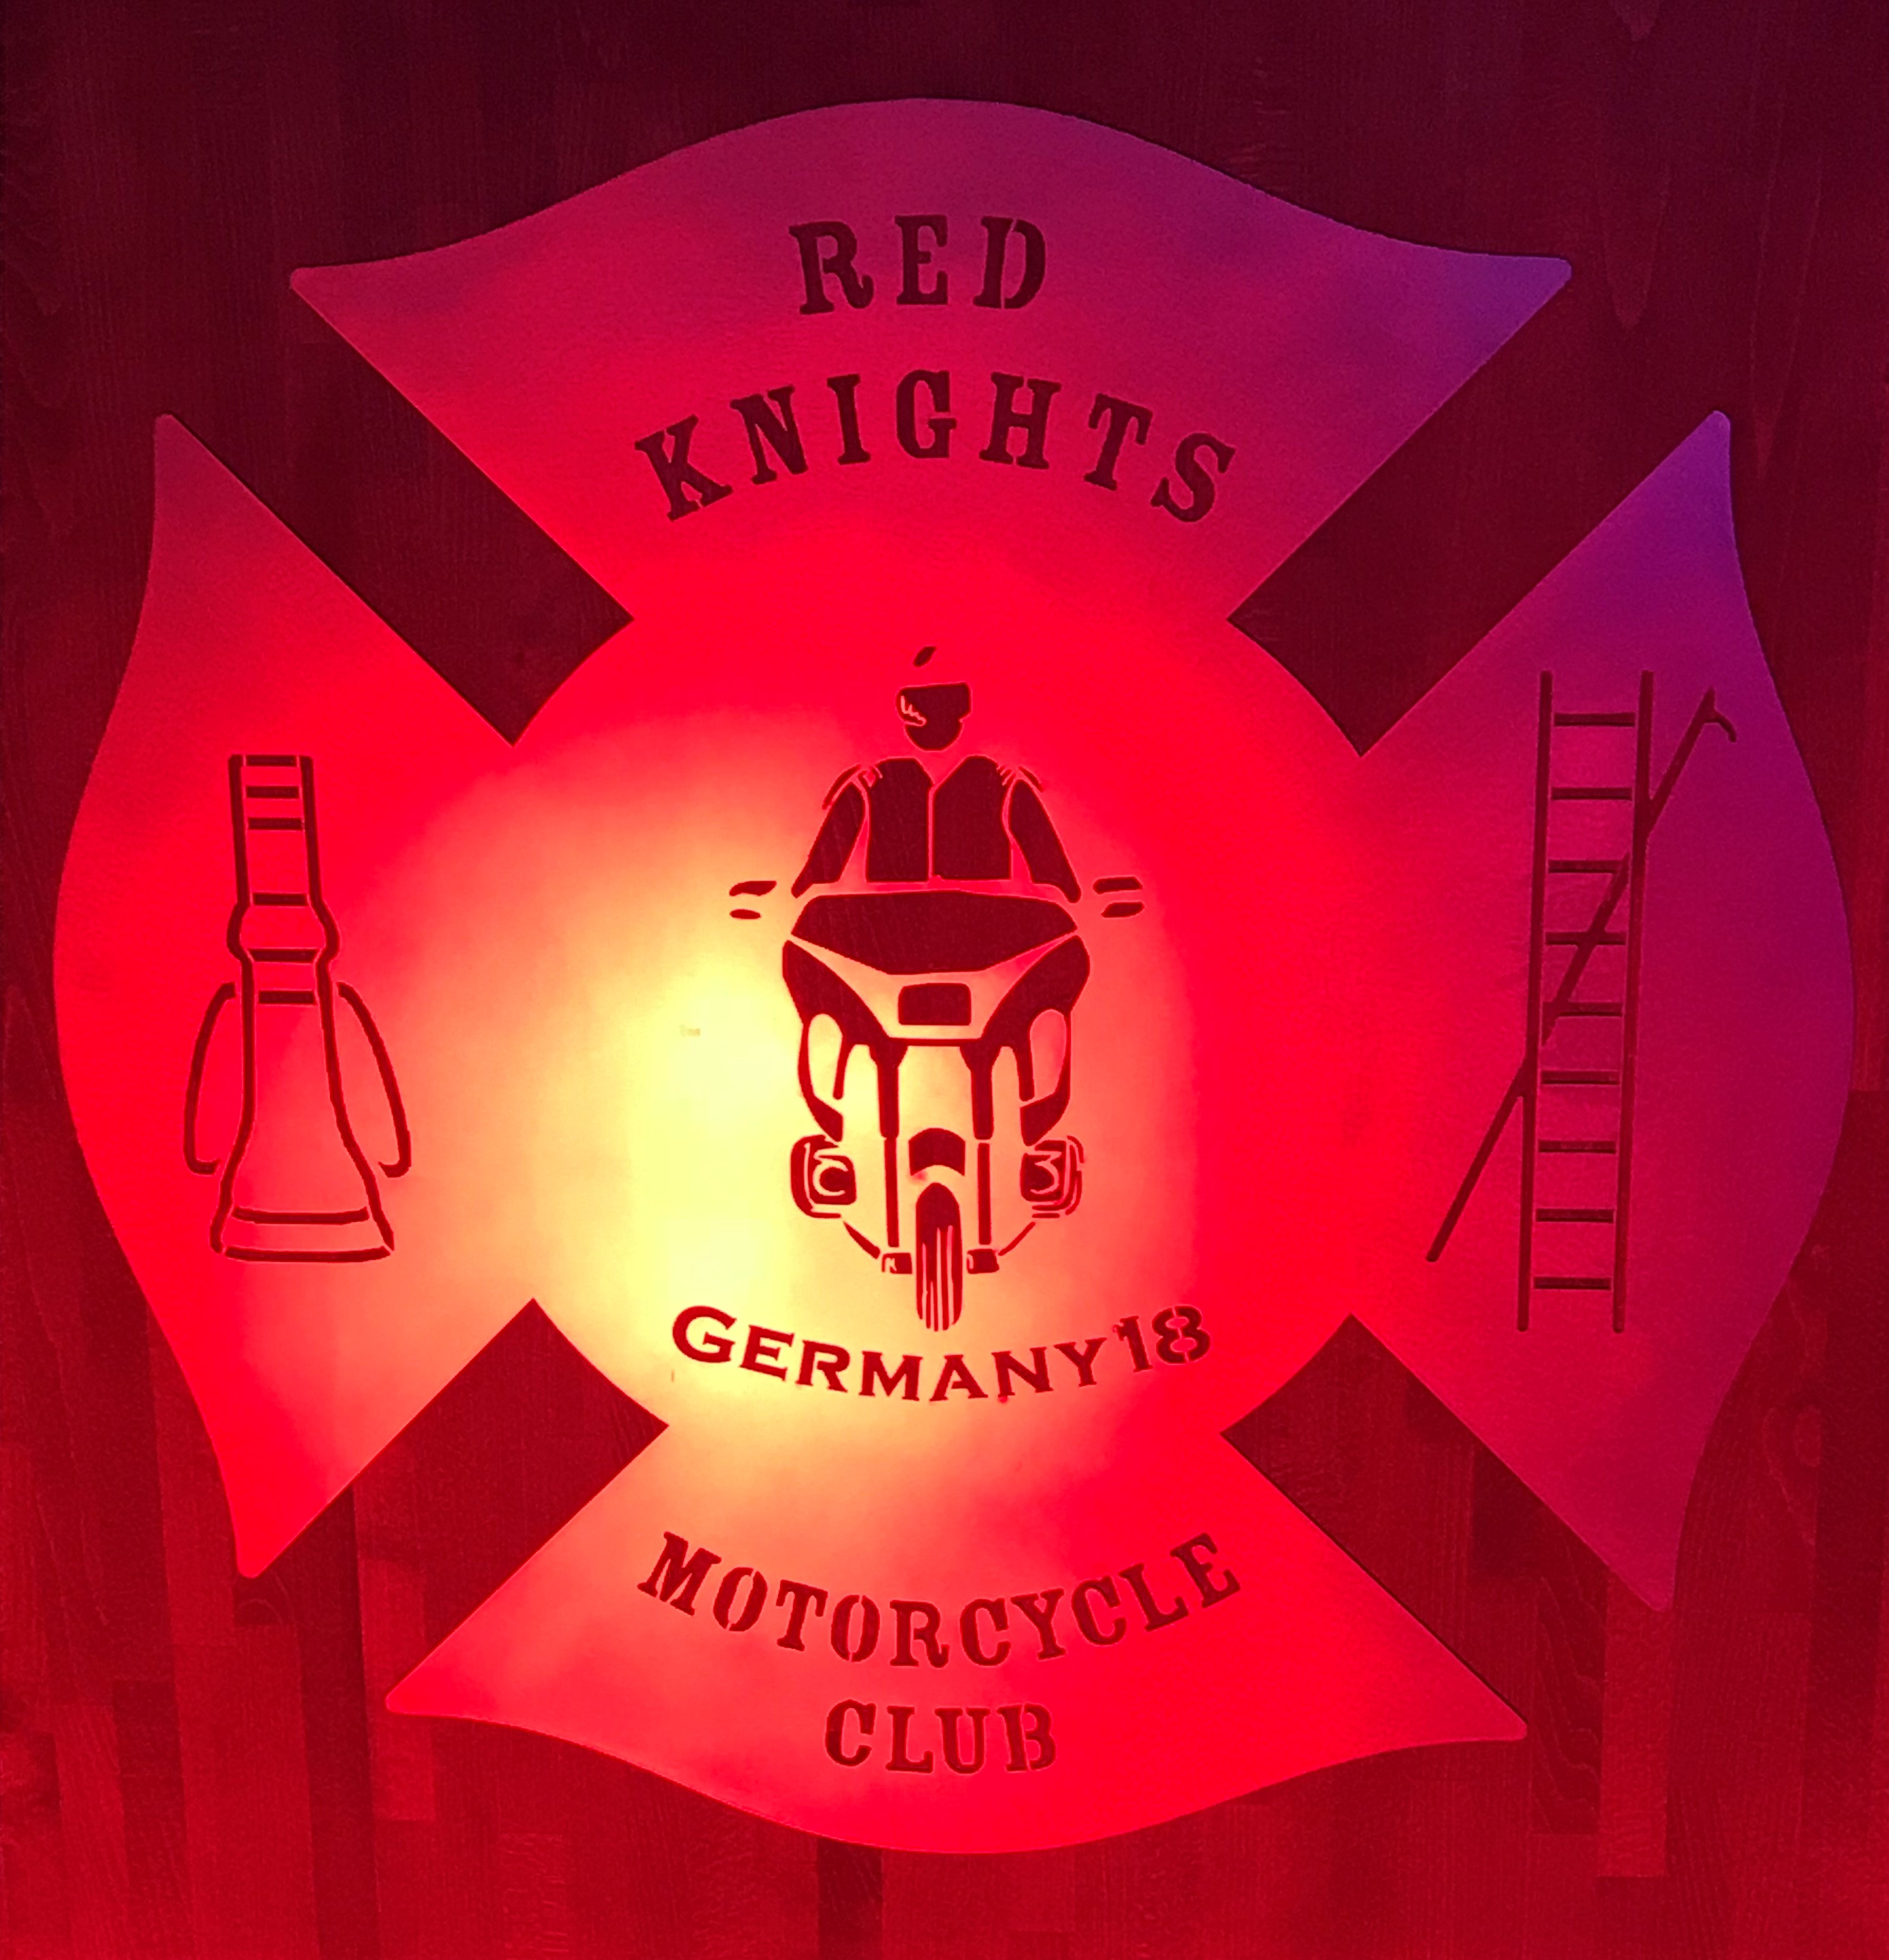 (c) Red-knights-mc-germany18.de